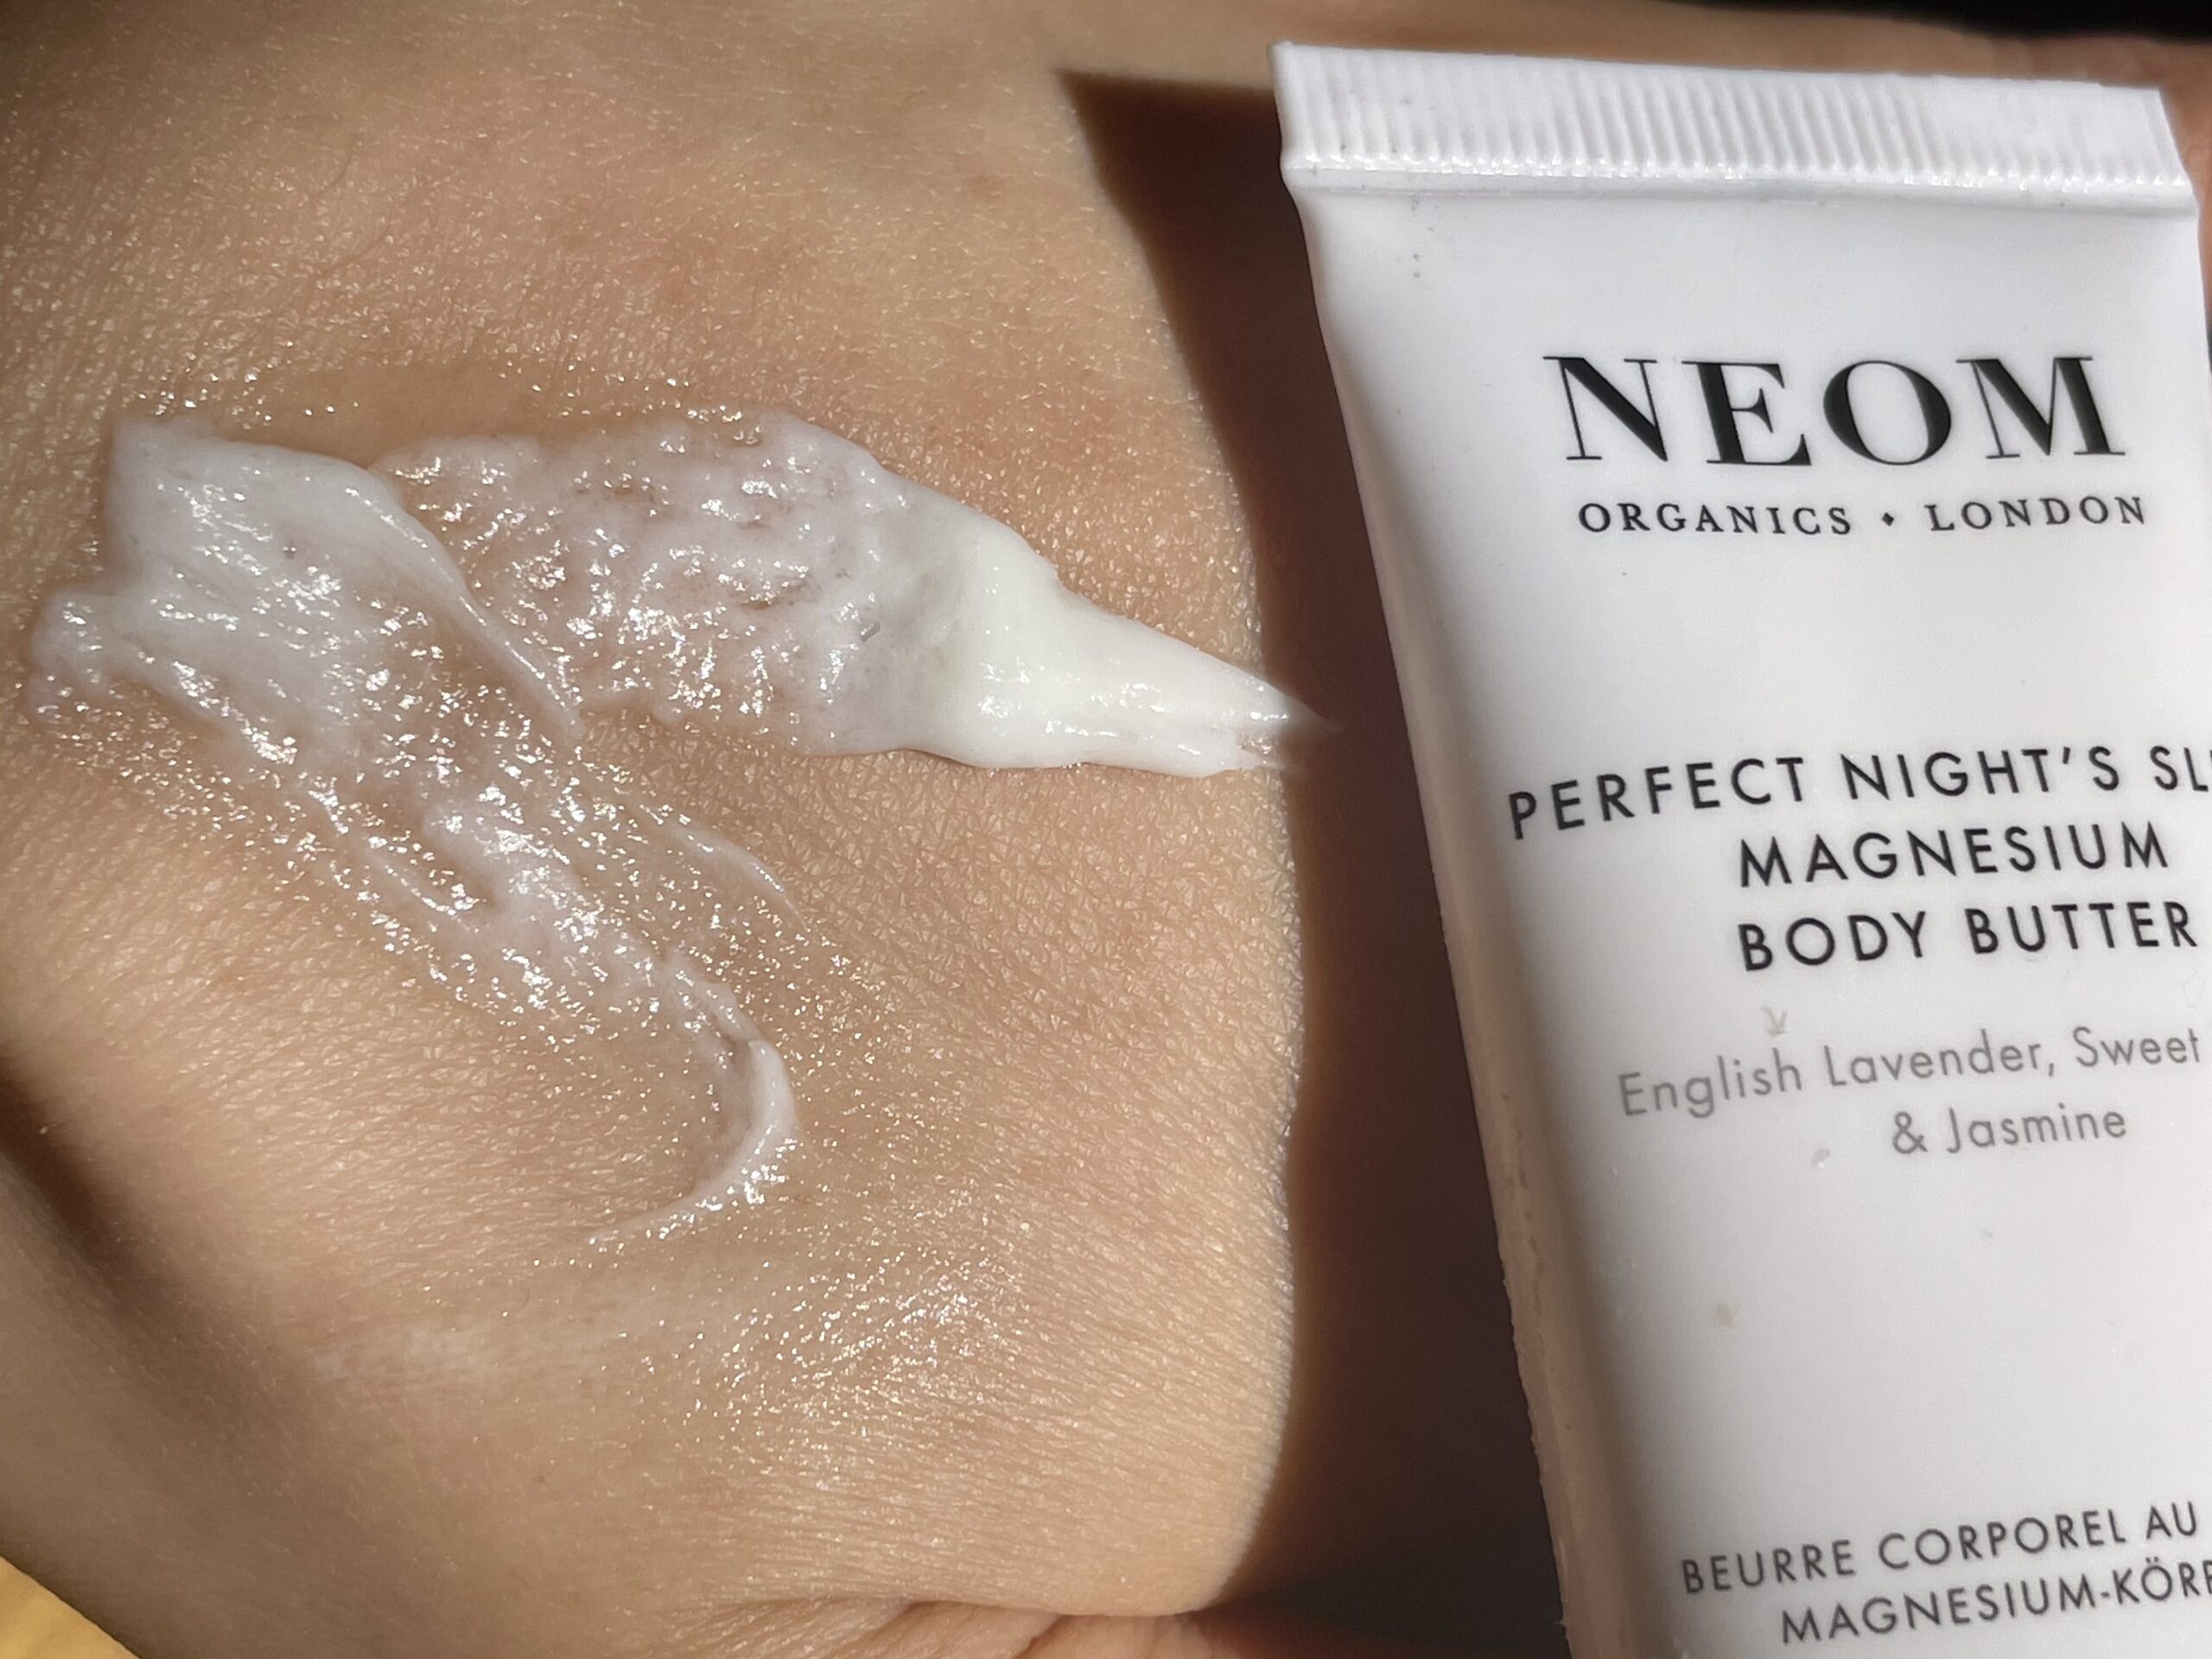 Neom Organics body butter